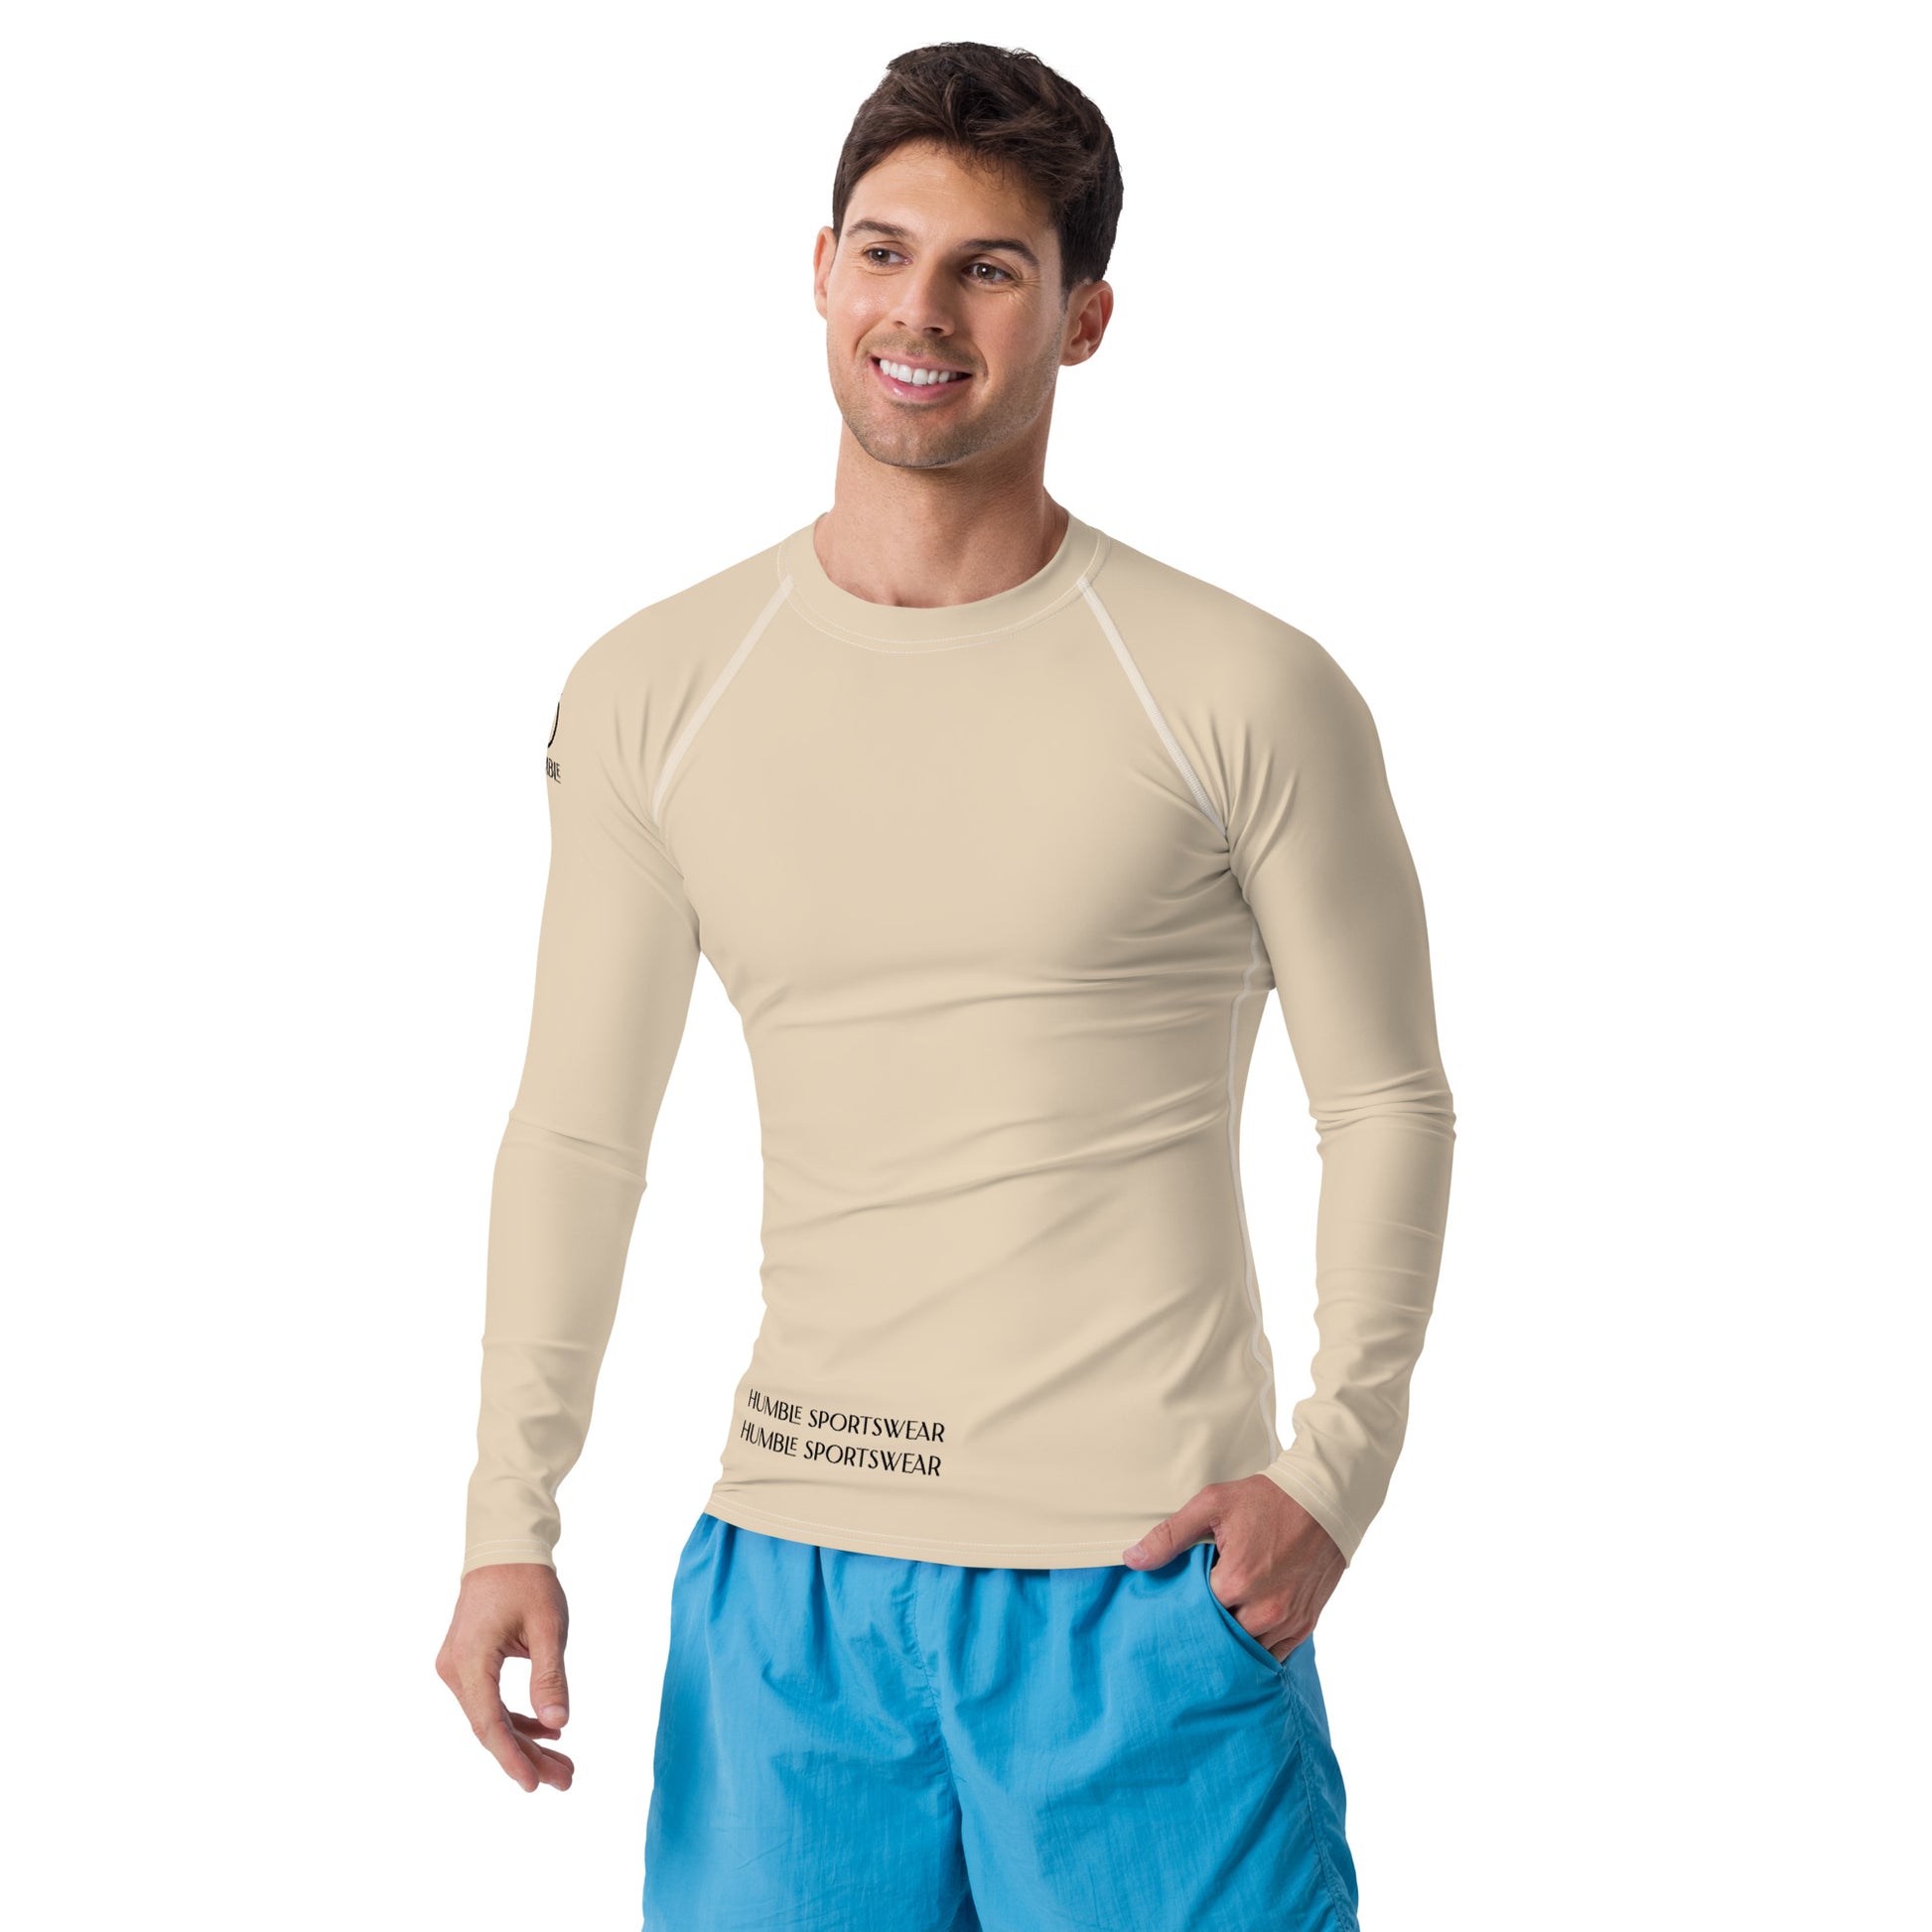 Humble Sportswear, men's color match long sleeve athletic rash guard, men's compression tops 